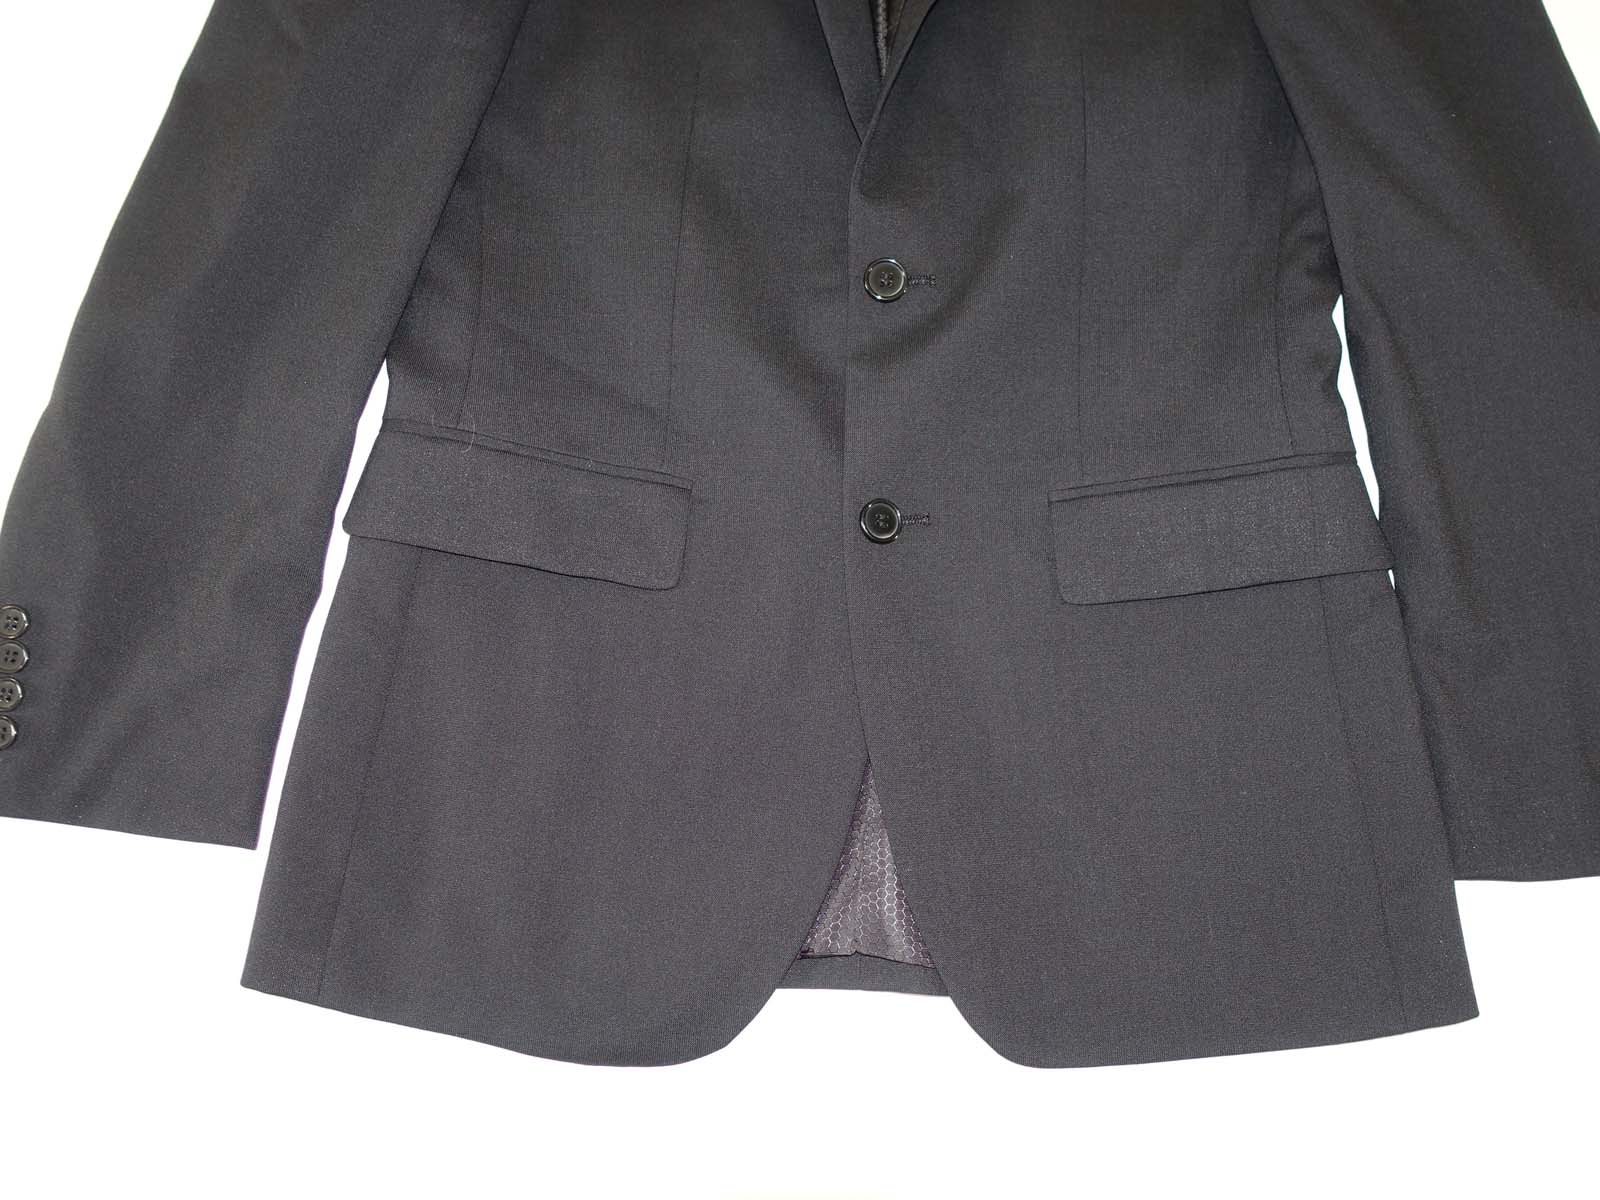 Linea Uomo Men's Suit Jacket - I'm So Fancy